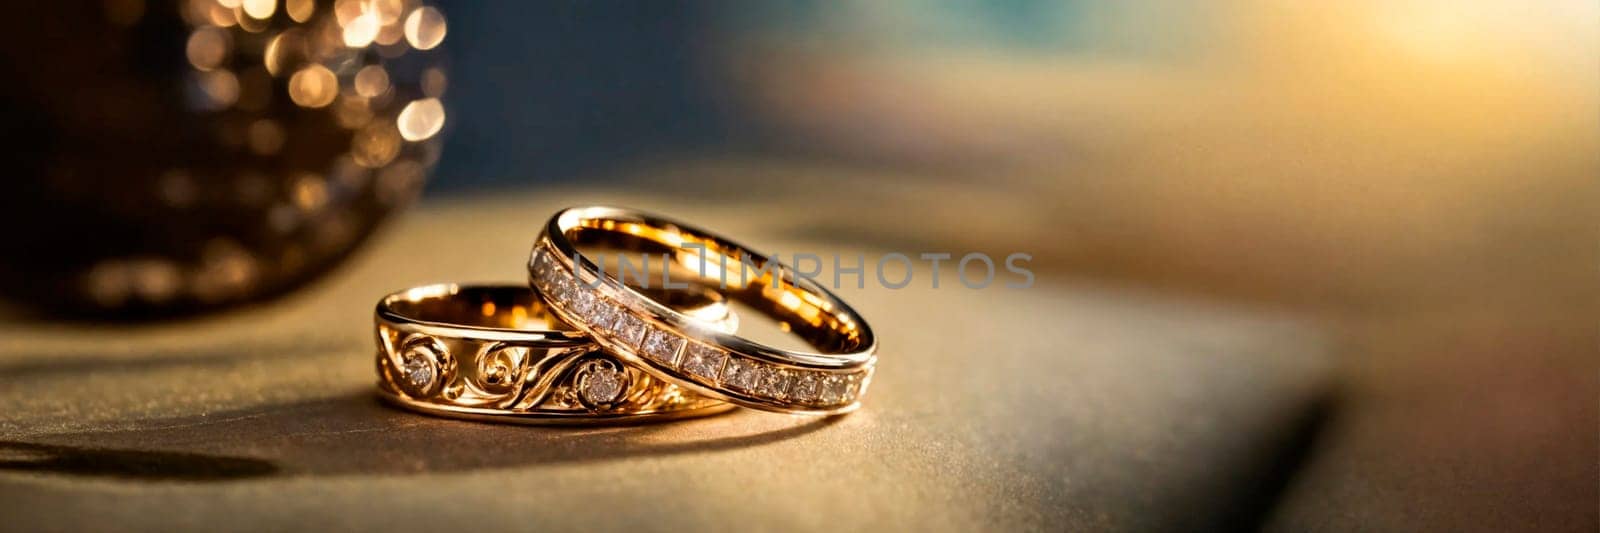 gemstones gold wedding rings. Selective focus. by yanadjana